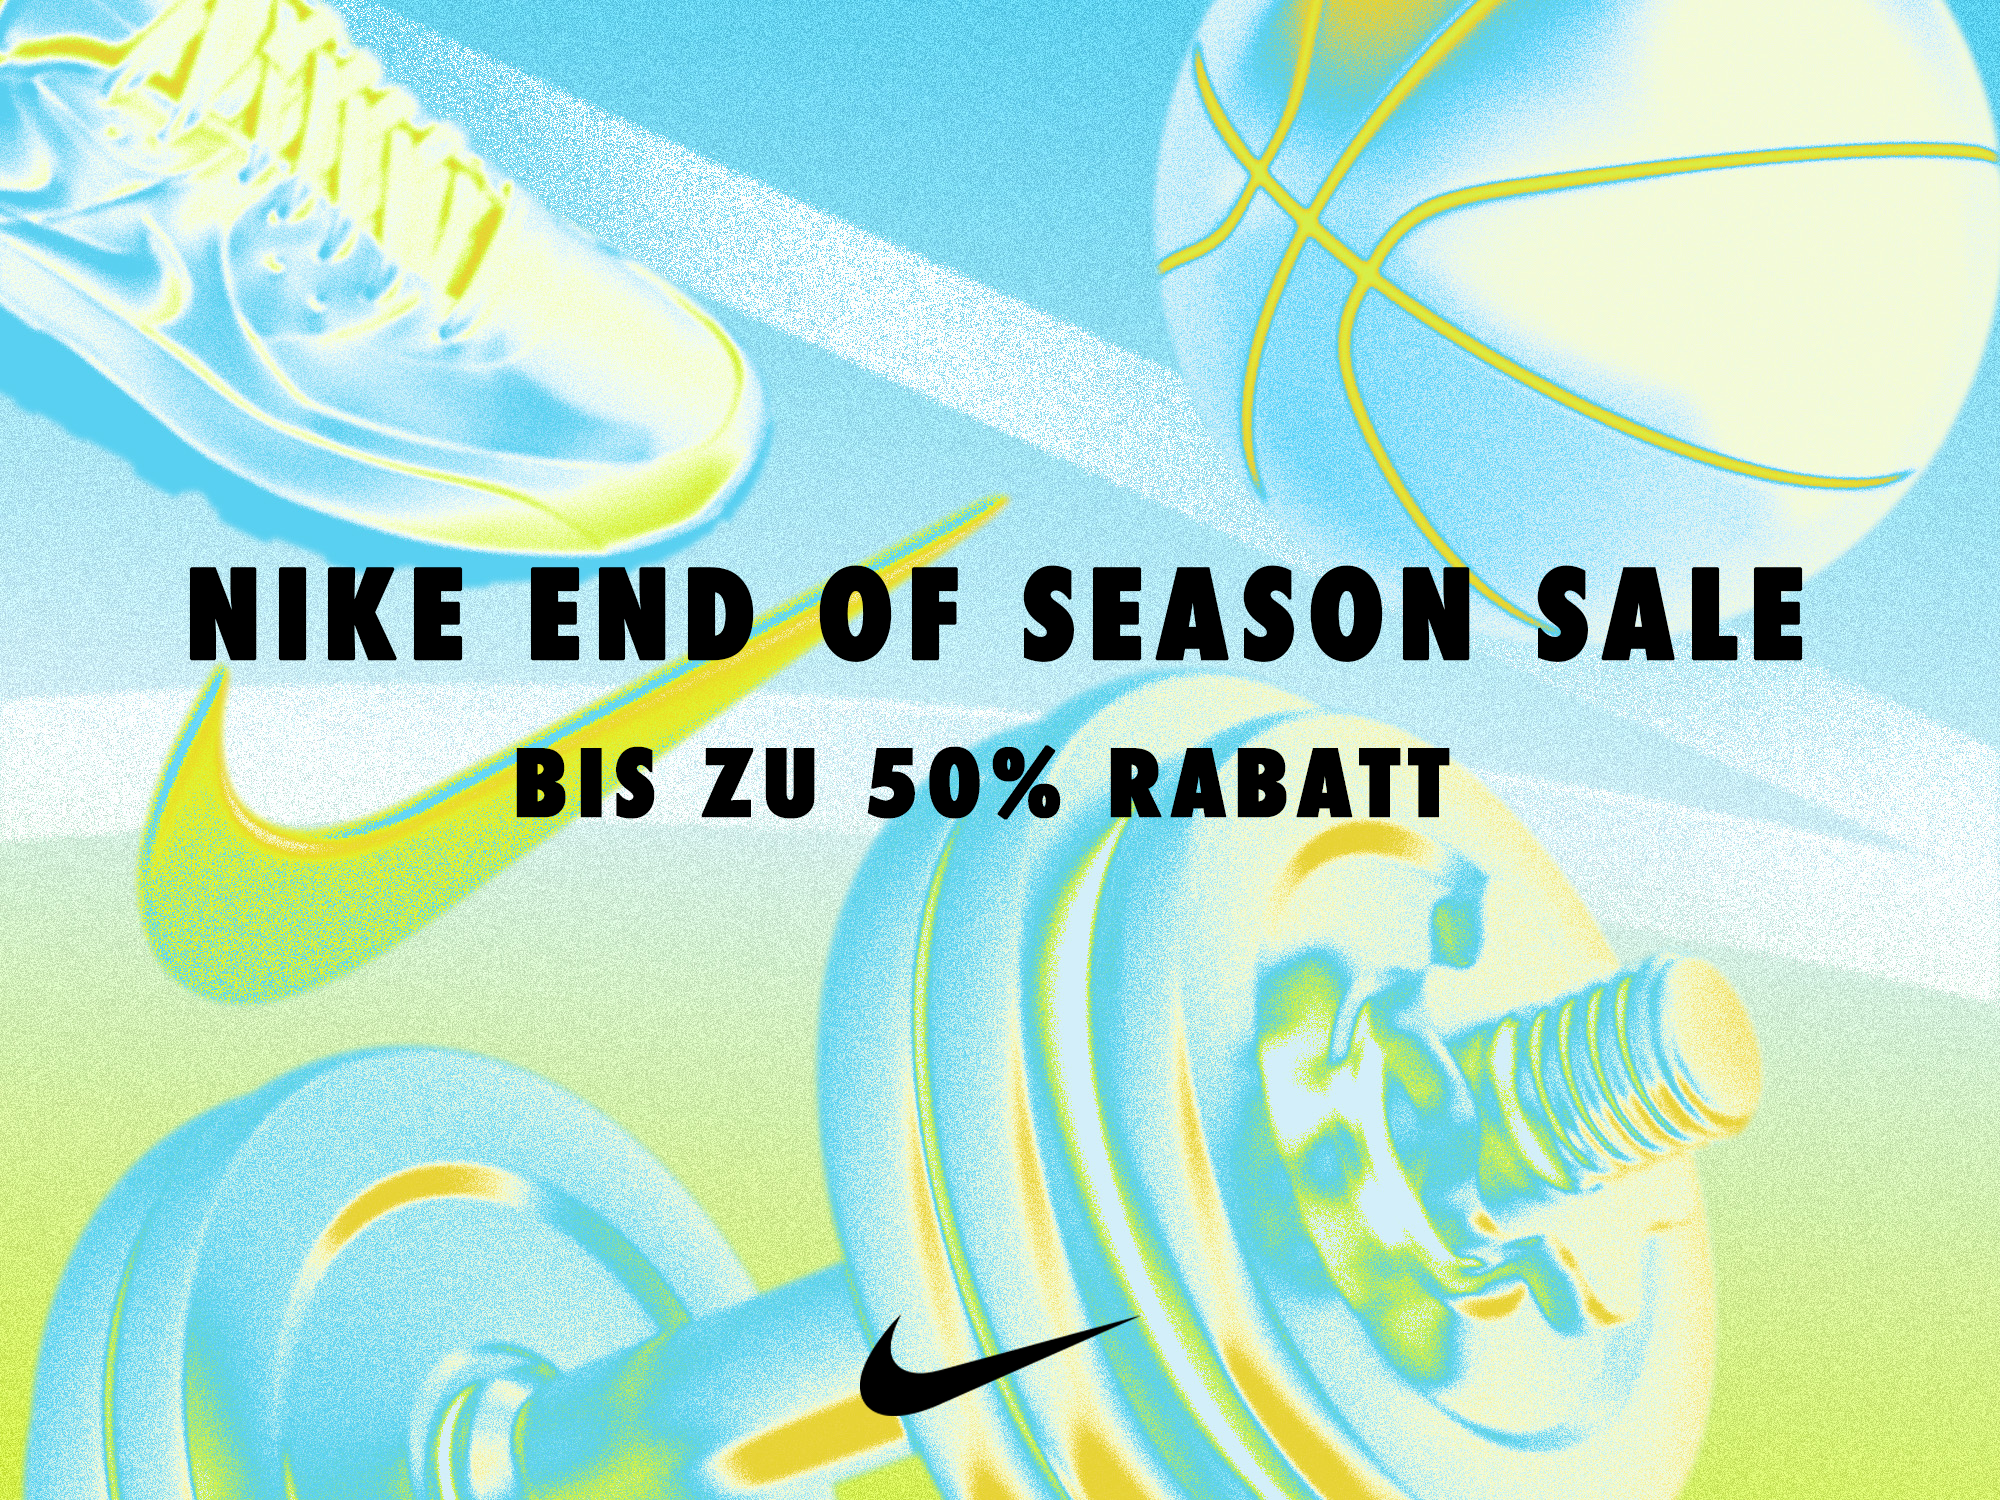 nike SAIL end of season sale banner